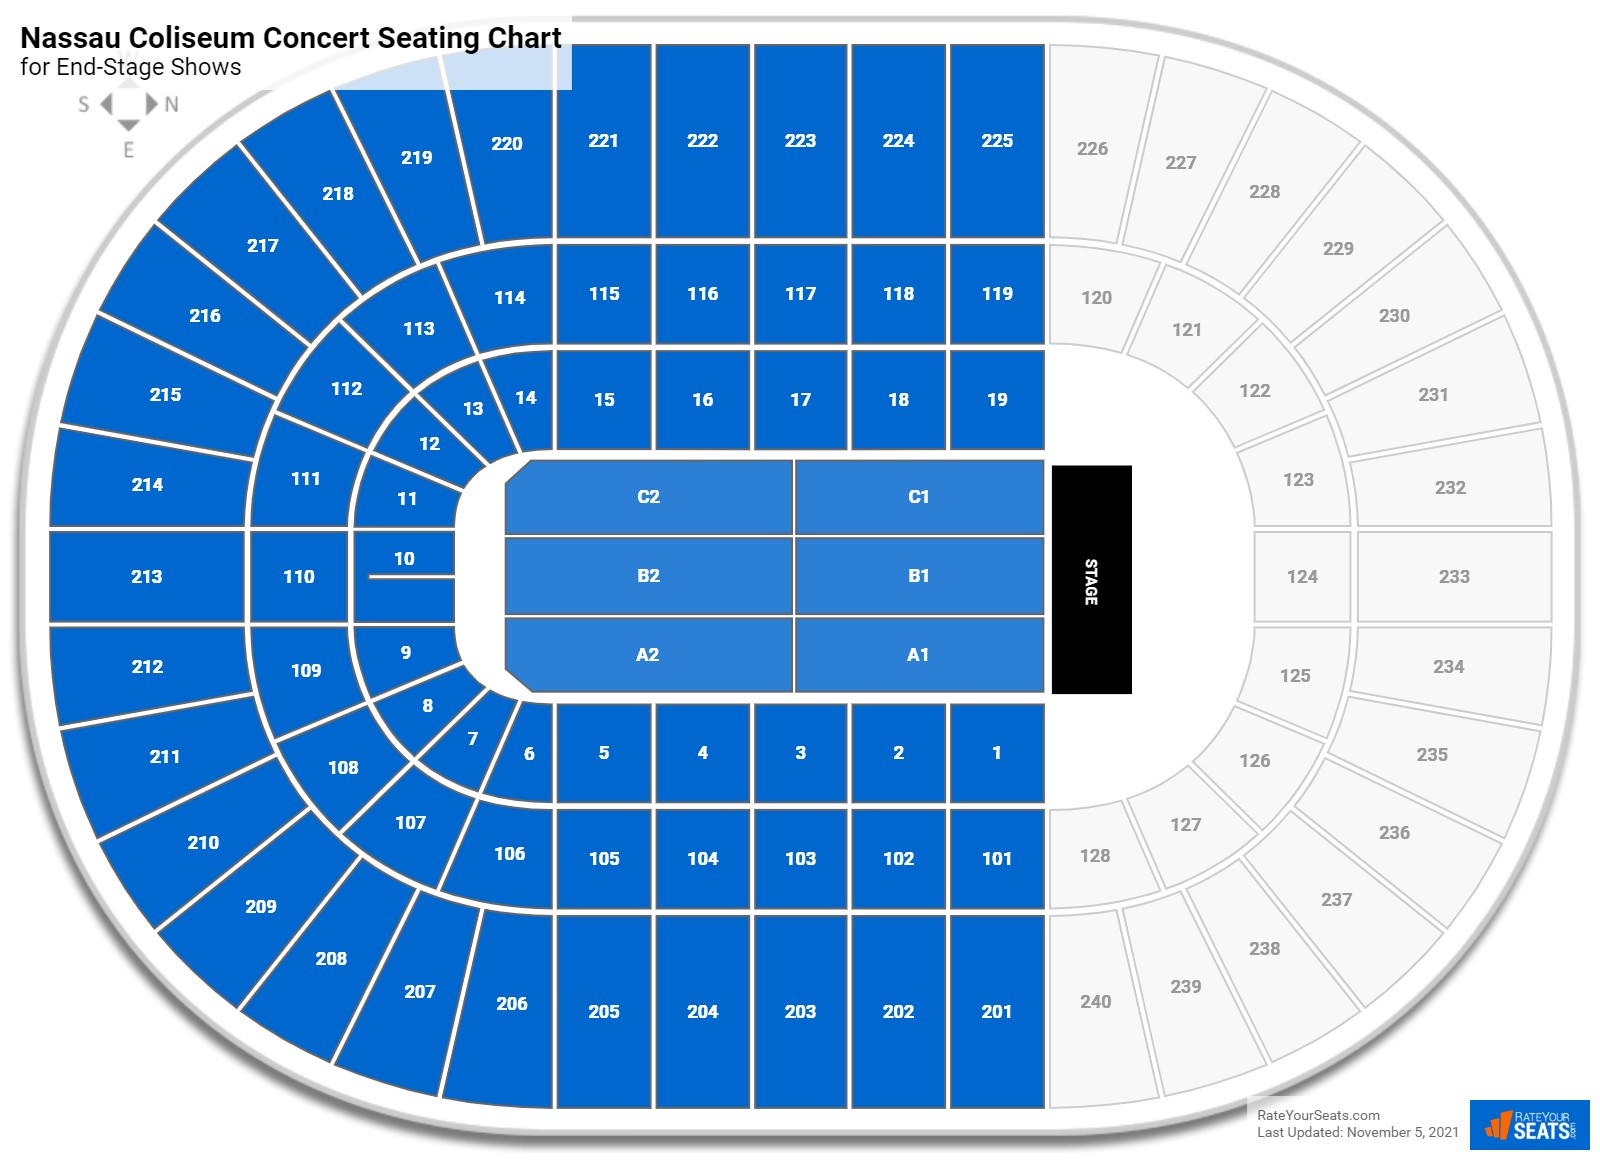 Nassau coliseum concert seating chart